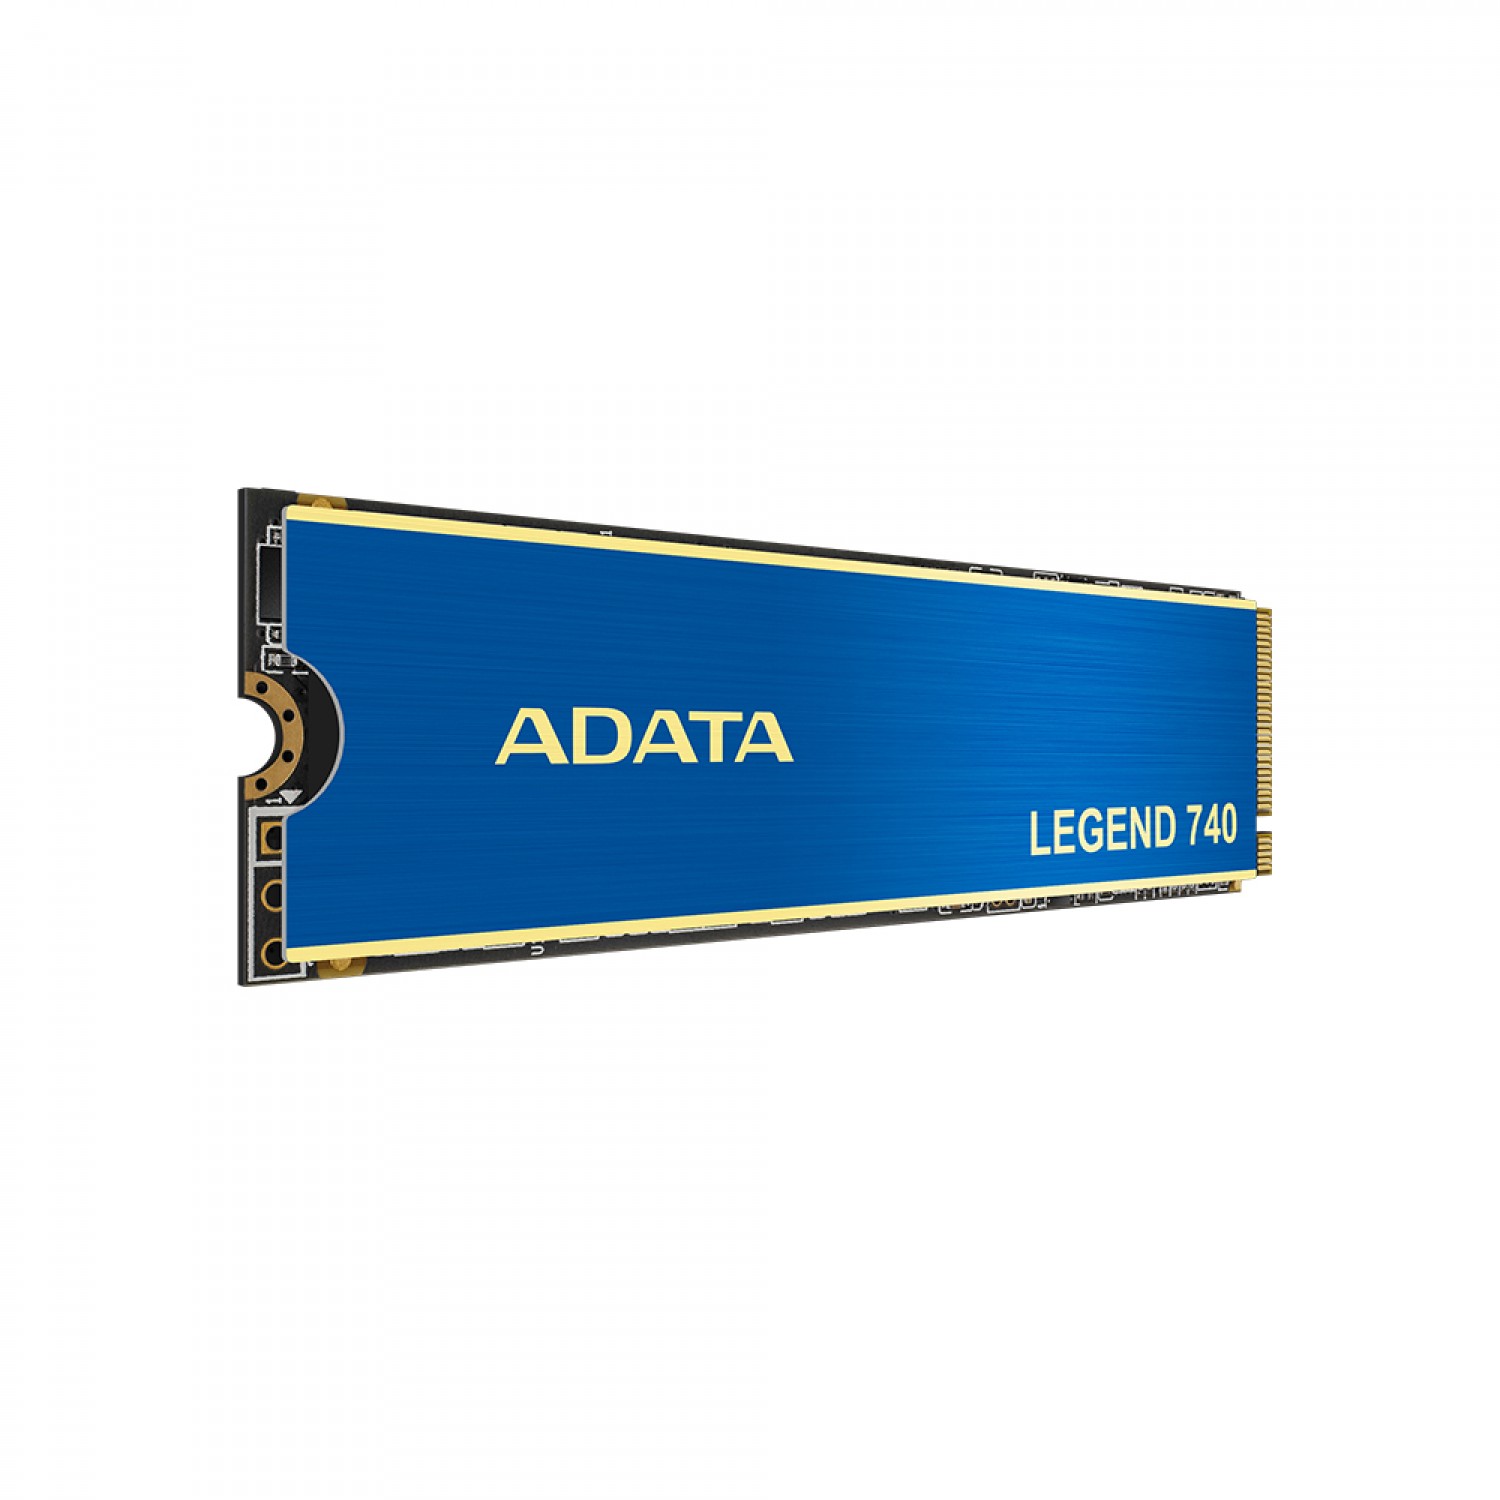 حافظه اس اس دی ADATA Legend 740 250GB-1